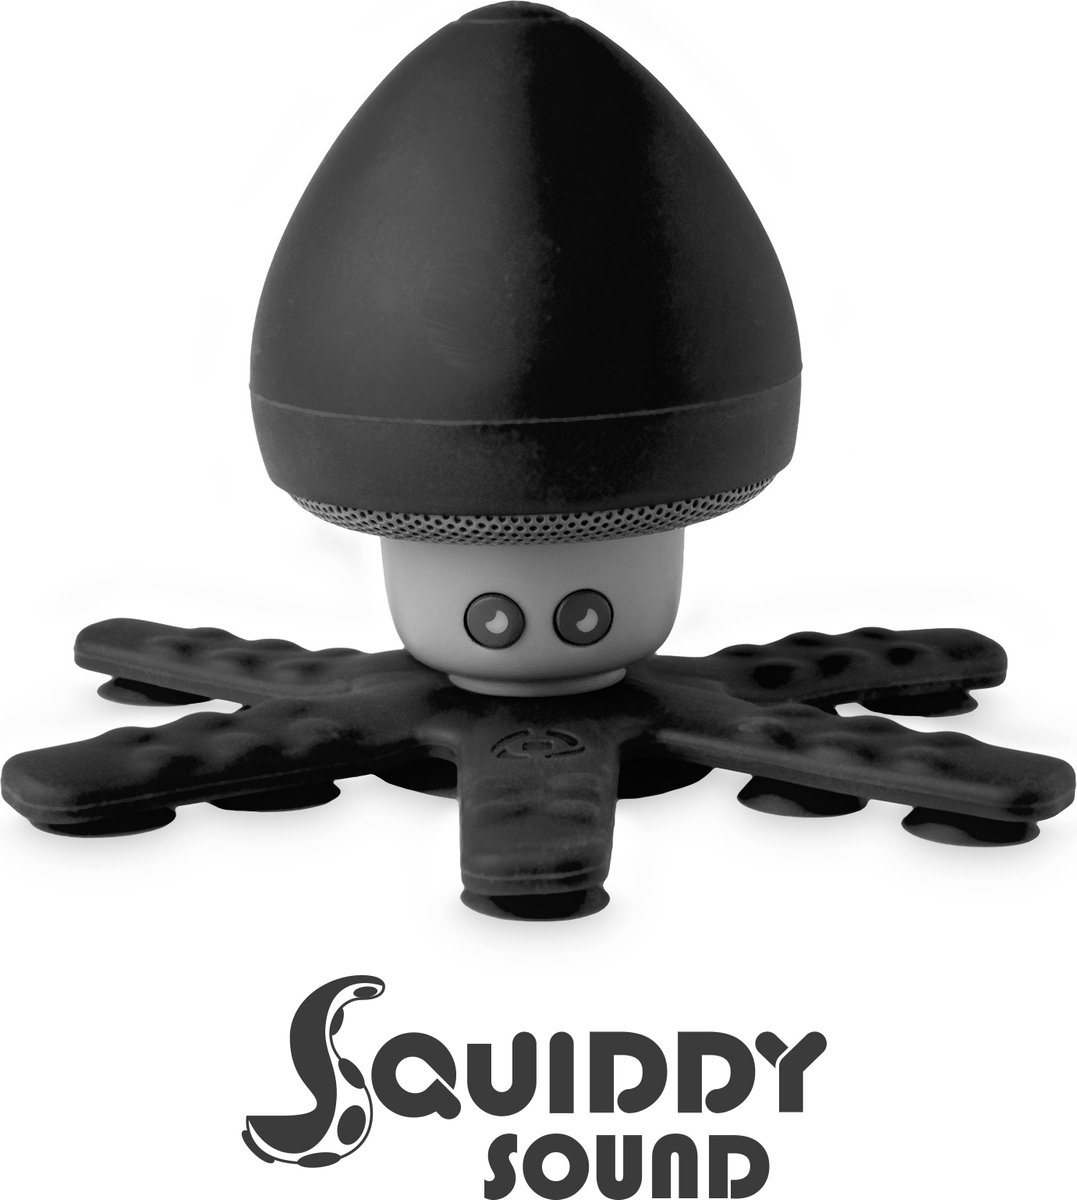 Celly - Squiddy Sound Bluetooth Speaker